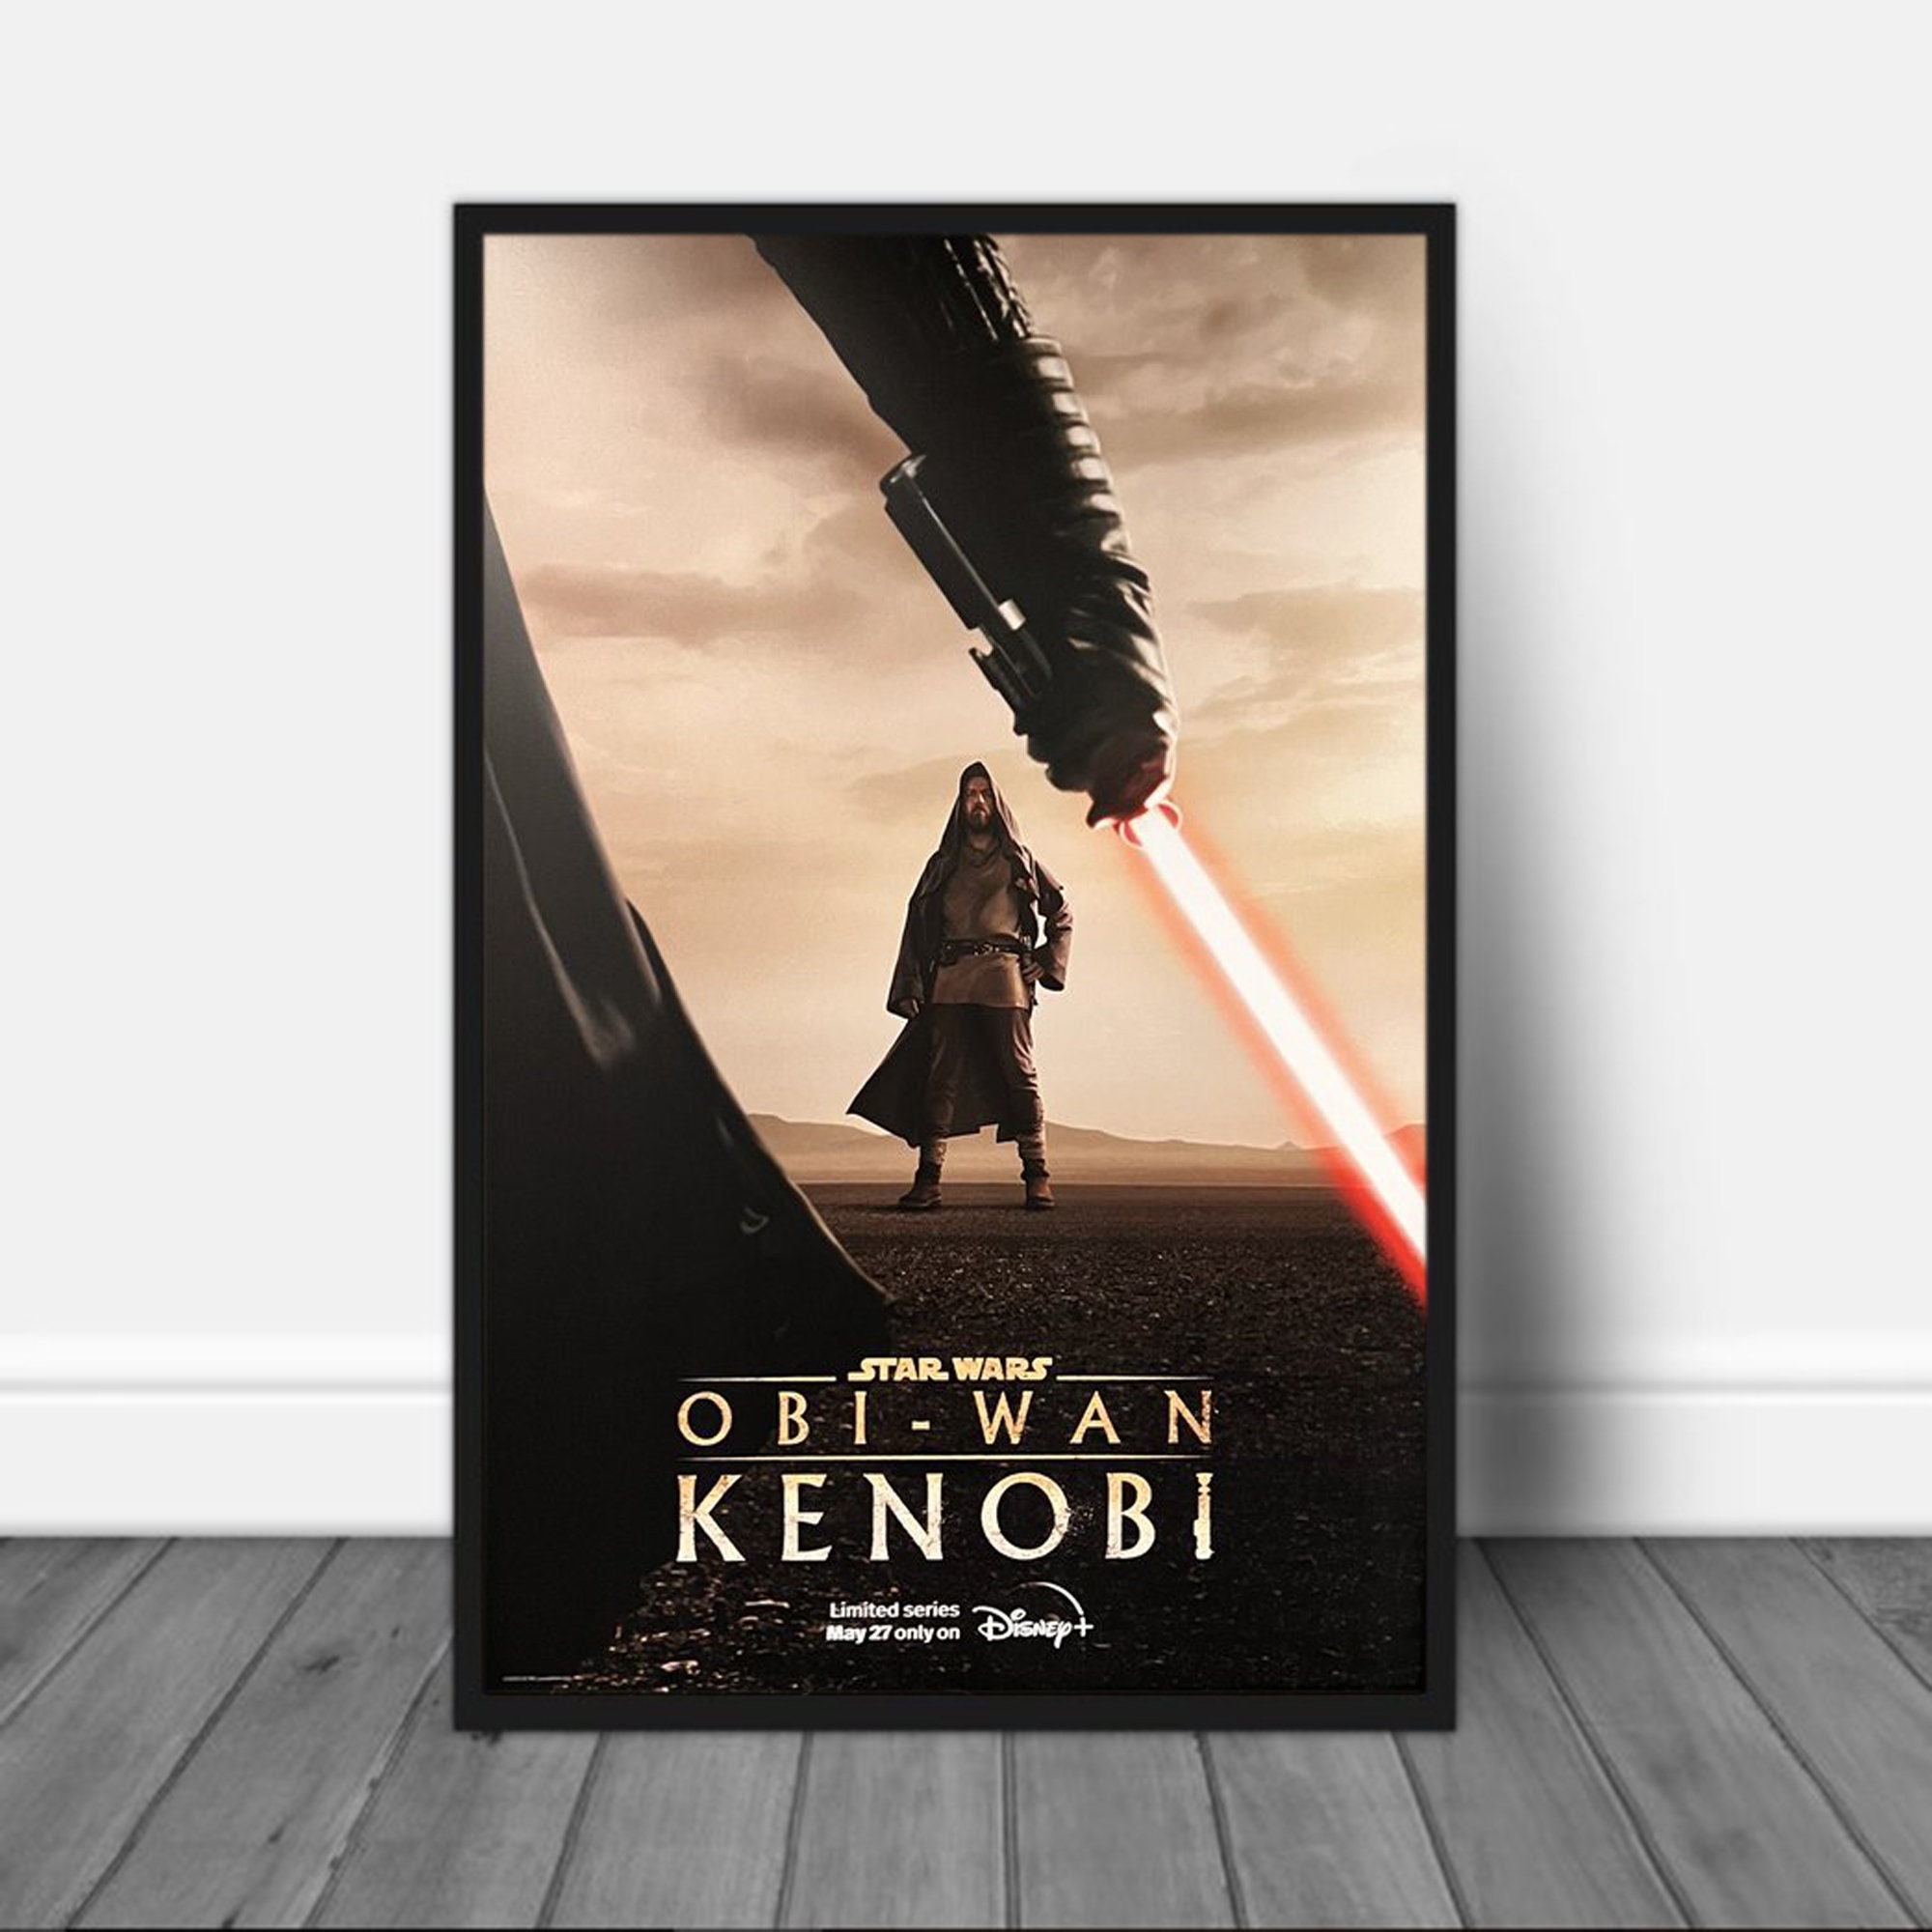 Star Wars Obi-Wan Kenobi Releases New Poster Wall Art